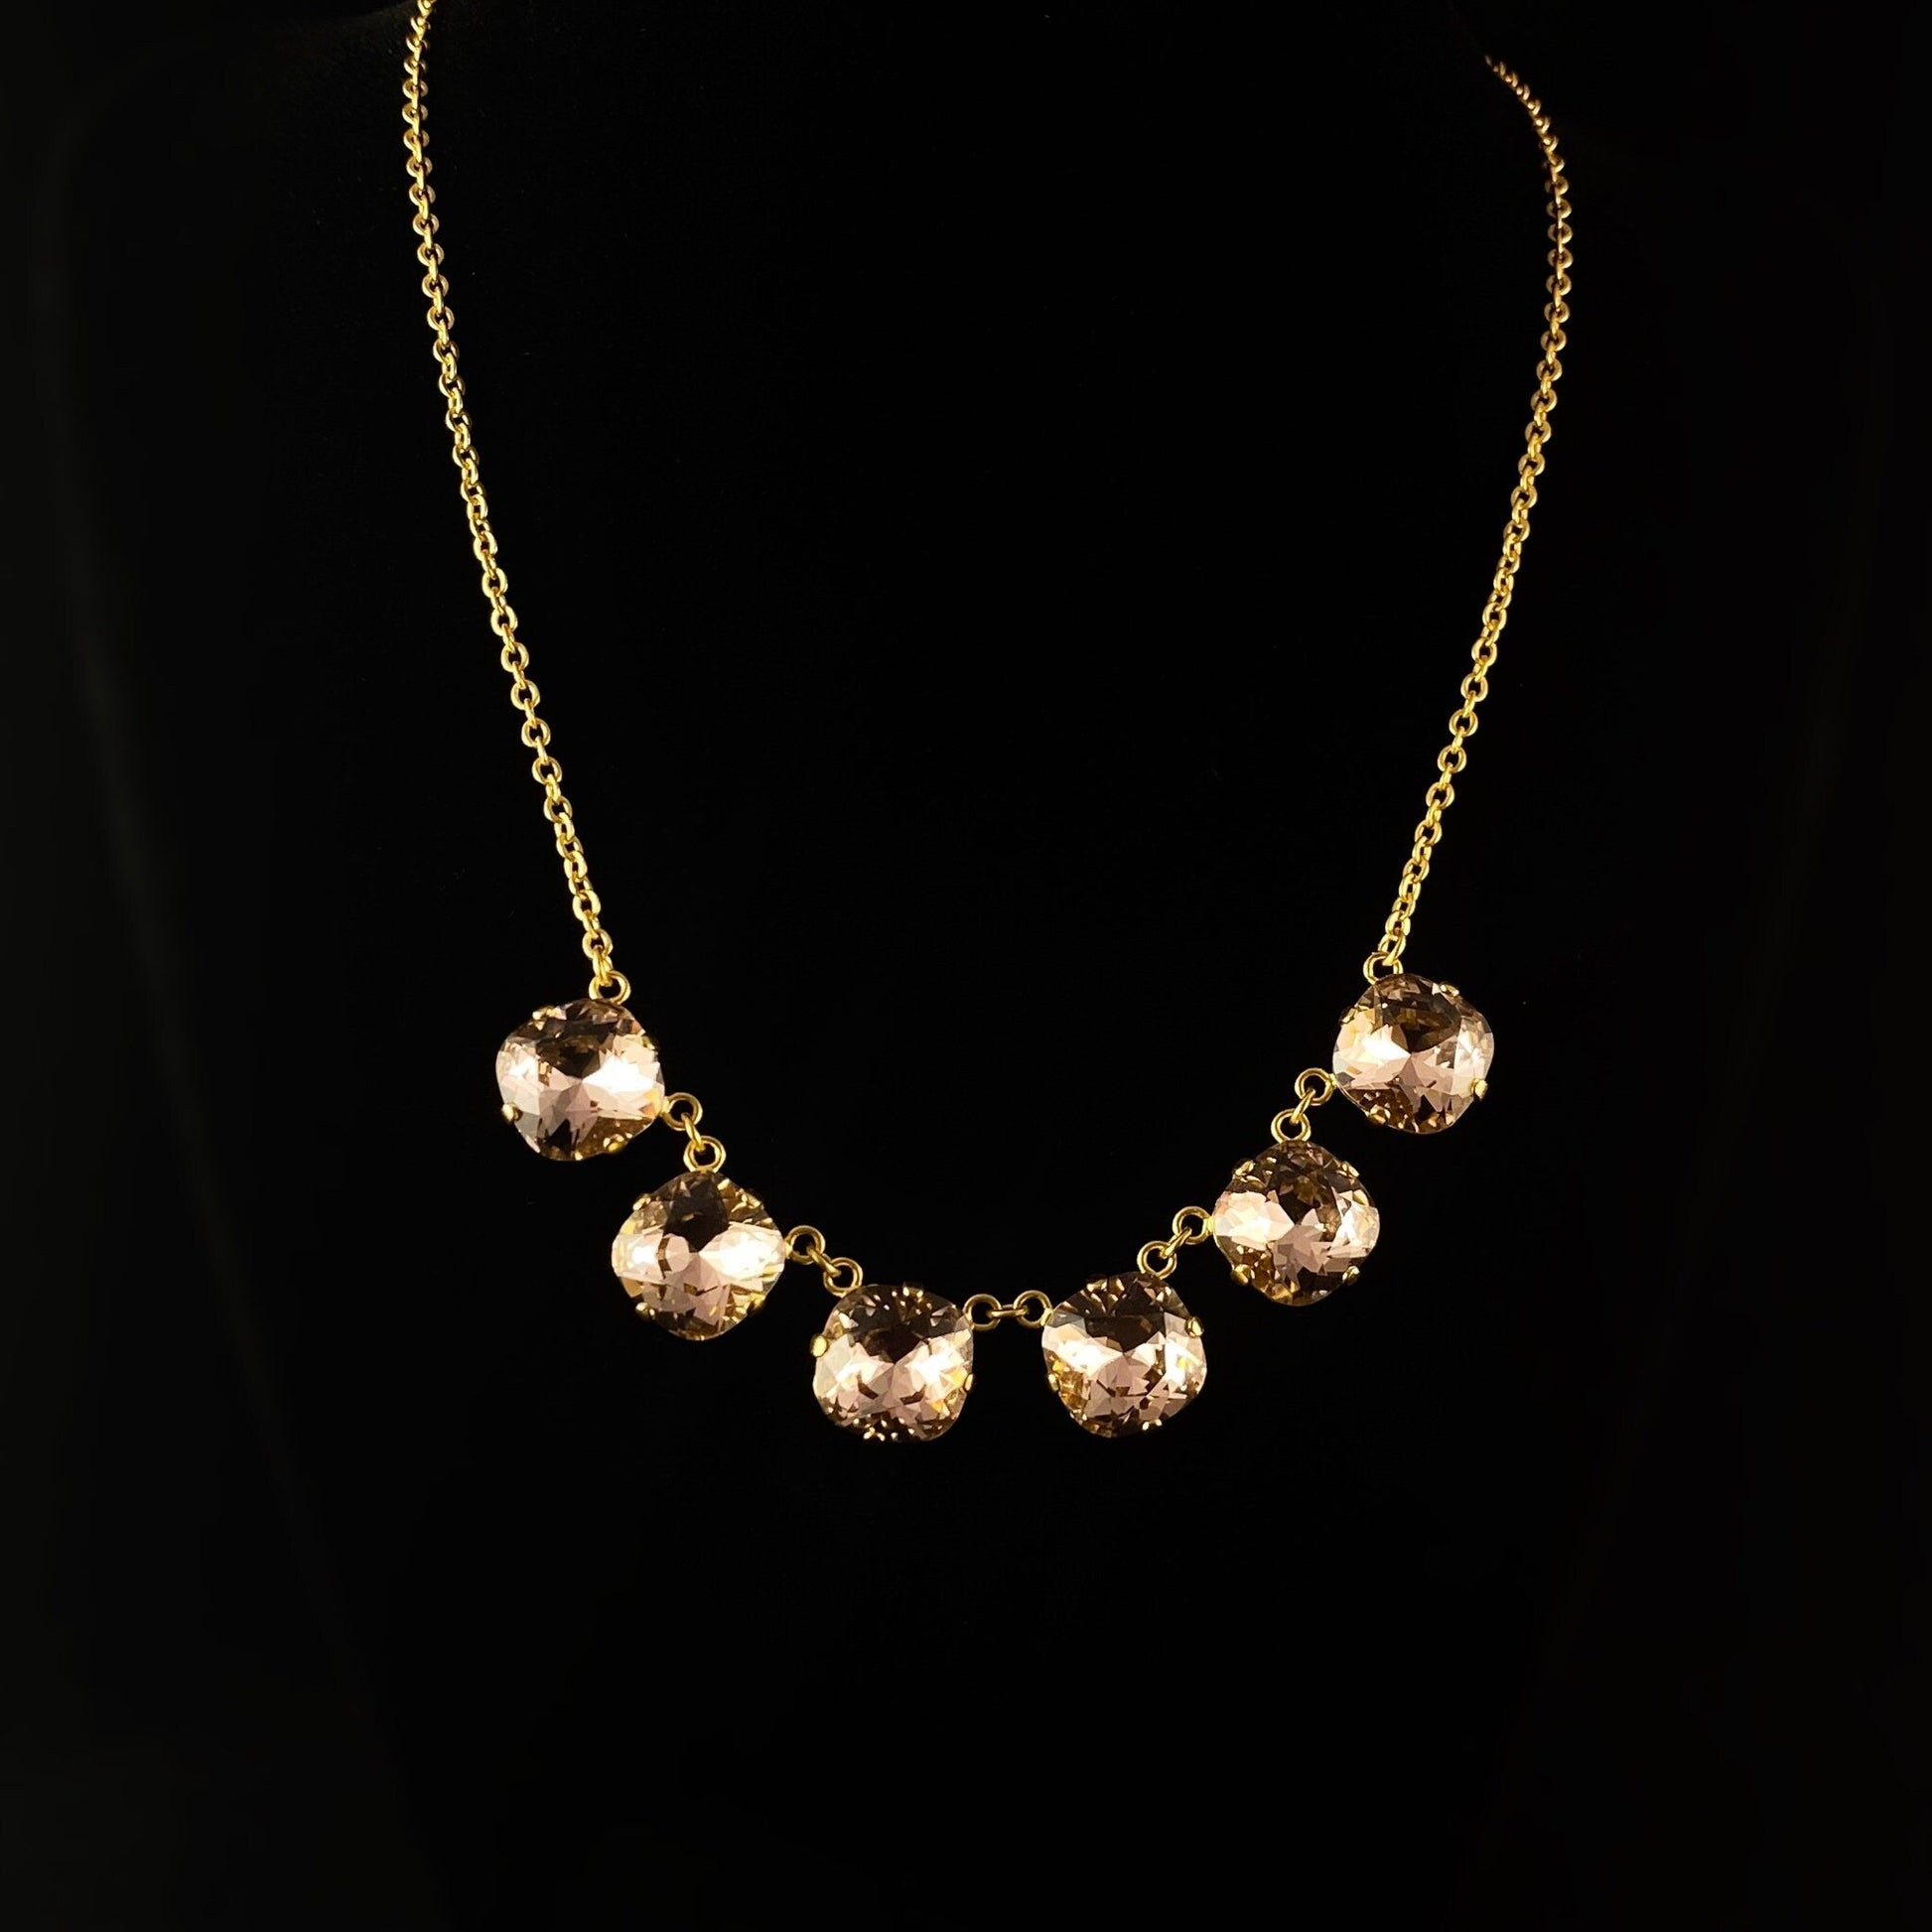 Cushion Cut Swarovski Crystal Pendant Necklace, Champagne Pink - La Vie Parisienne by Catherine Popesco